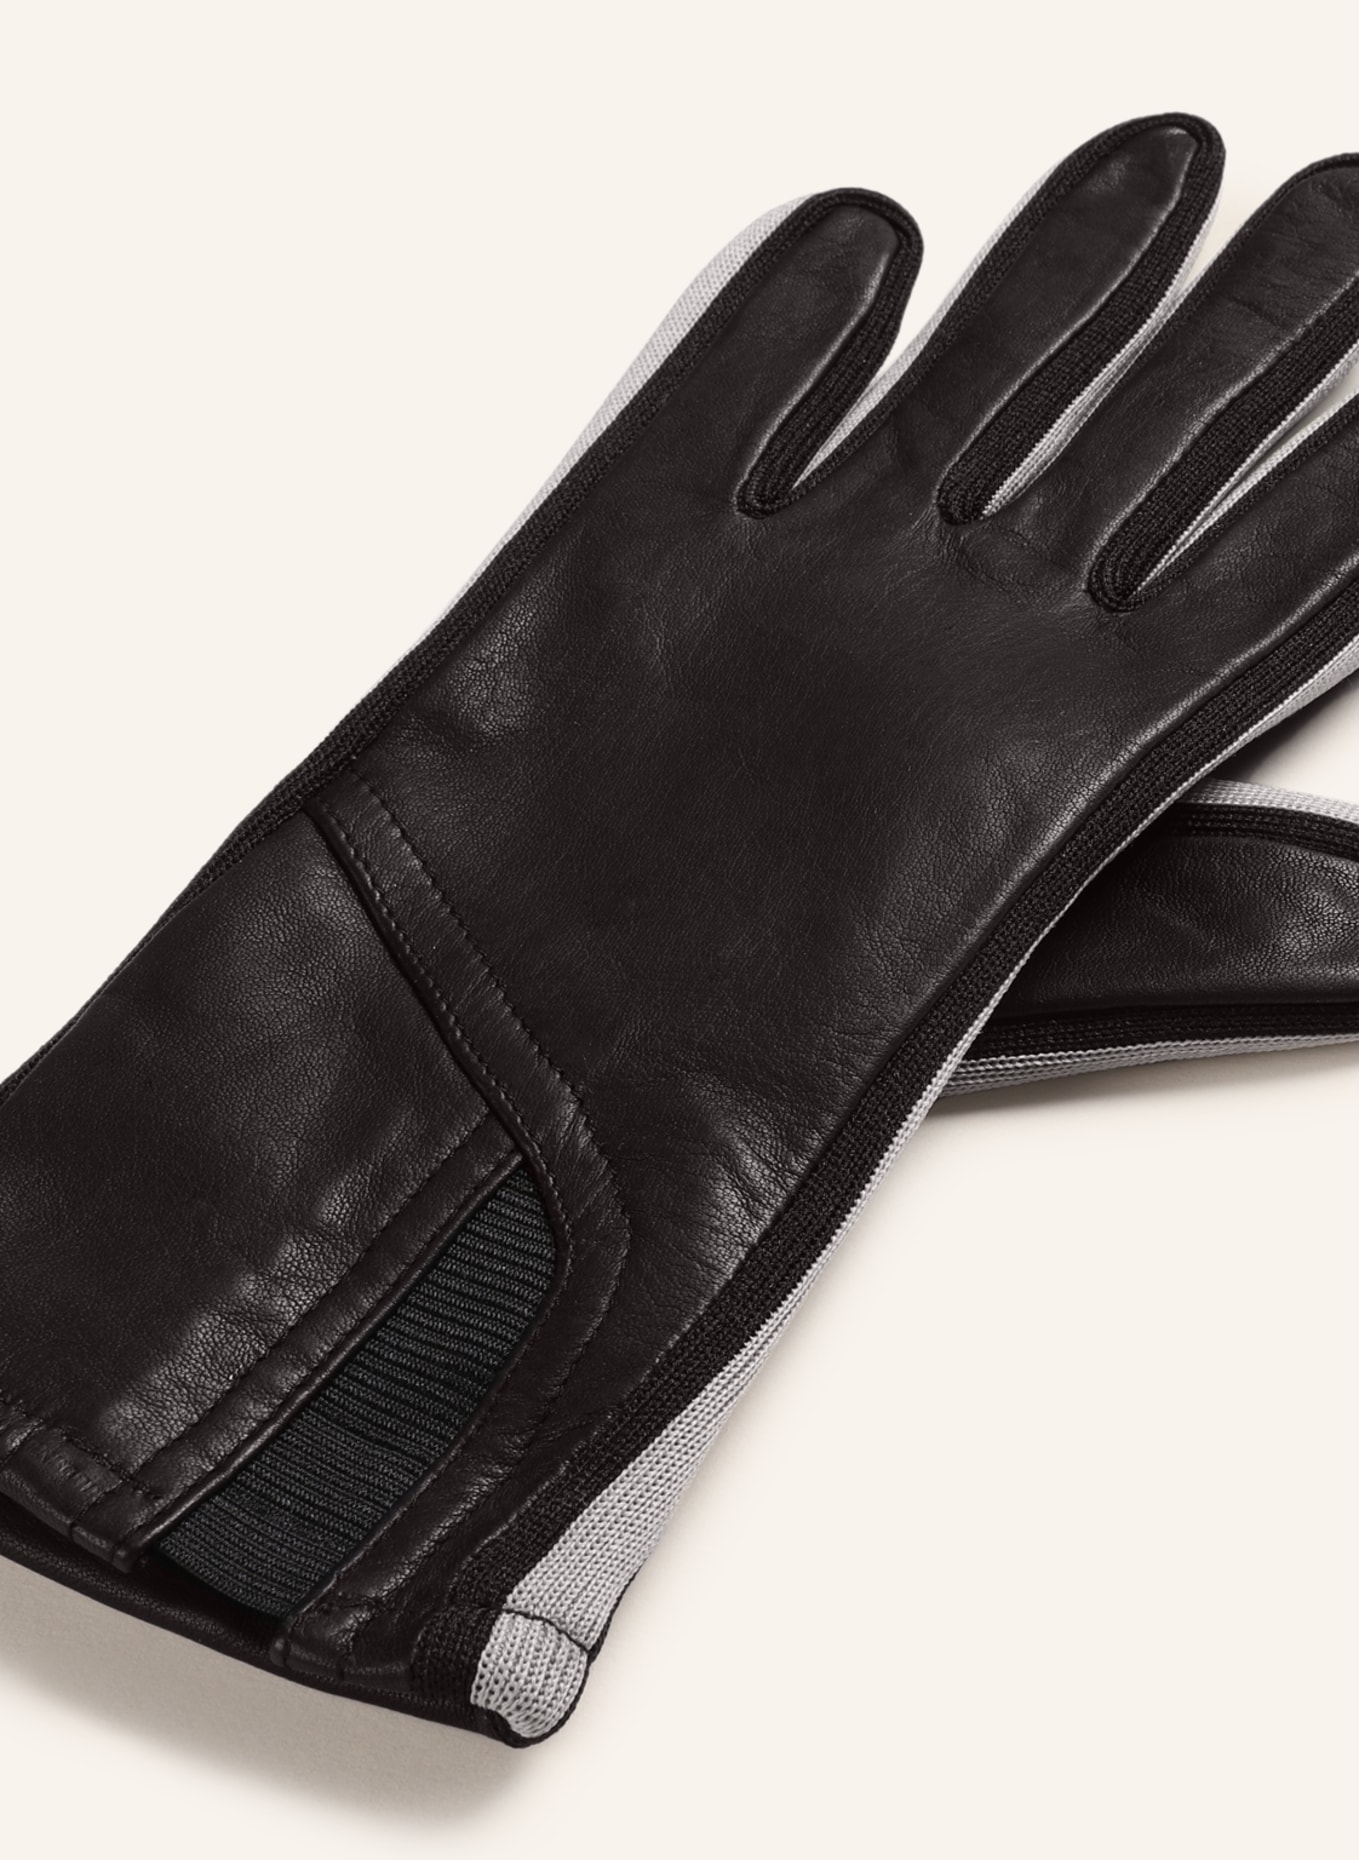 KESSLER Lederhandschuhe GIL TOUCH mit Touchscreen-Funktion, Farbe: SCHWARZ (Bild 2)